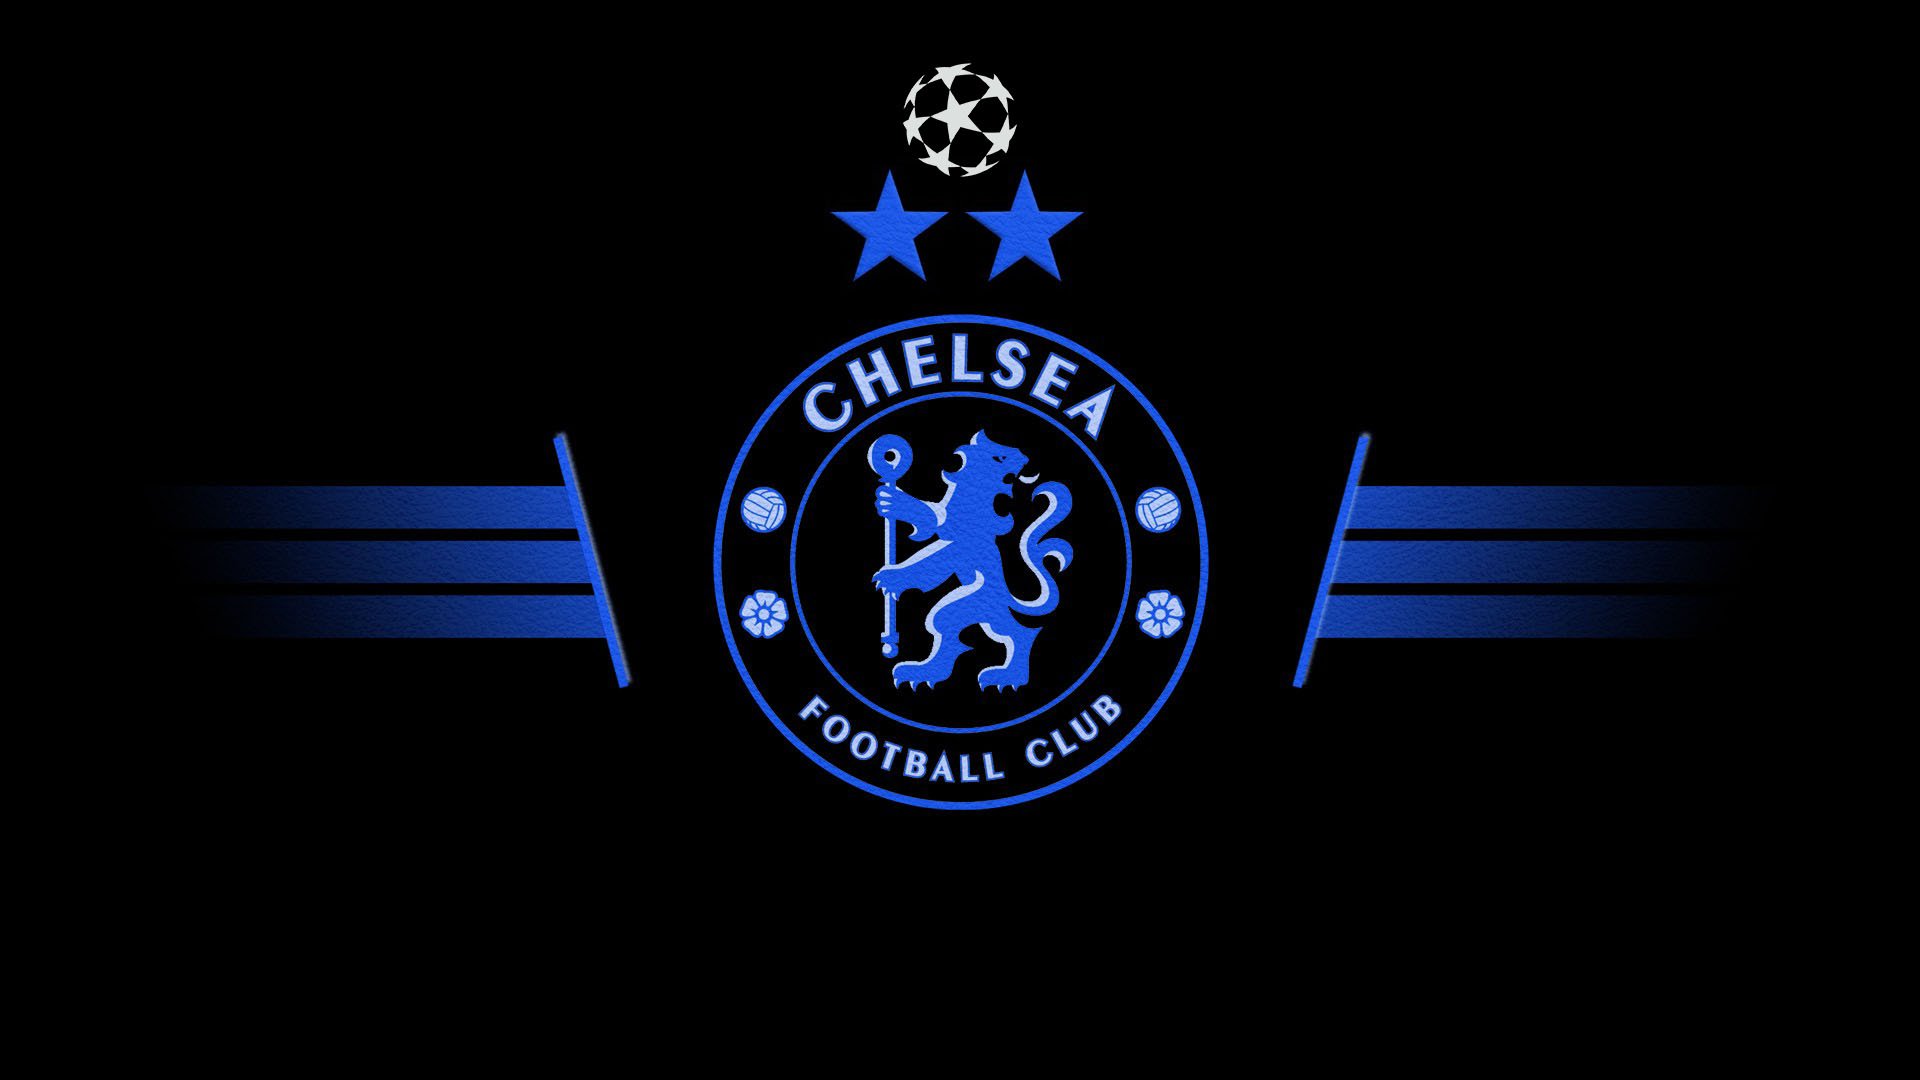 General 1920x1080 soccer Champions League soccer clubs Chelsea FC logo black background simple background digital art